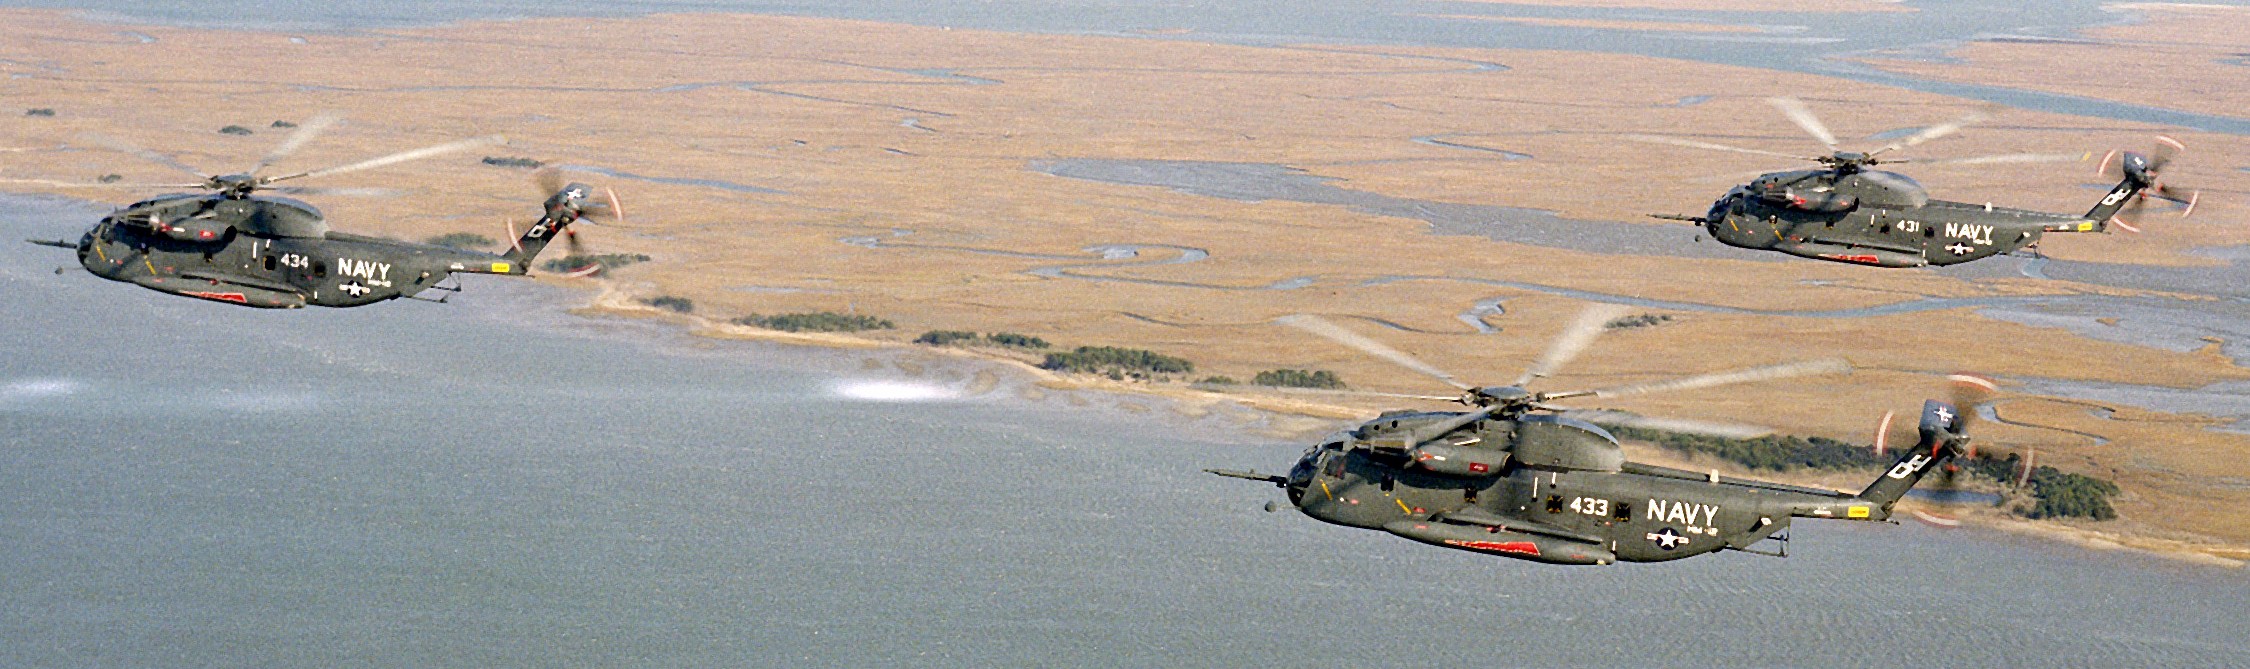 hm-12 sea dragons helicopter mine countermeasures squadron navy rh-53d sea stallion 02